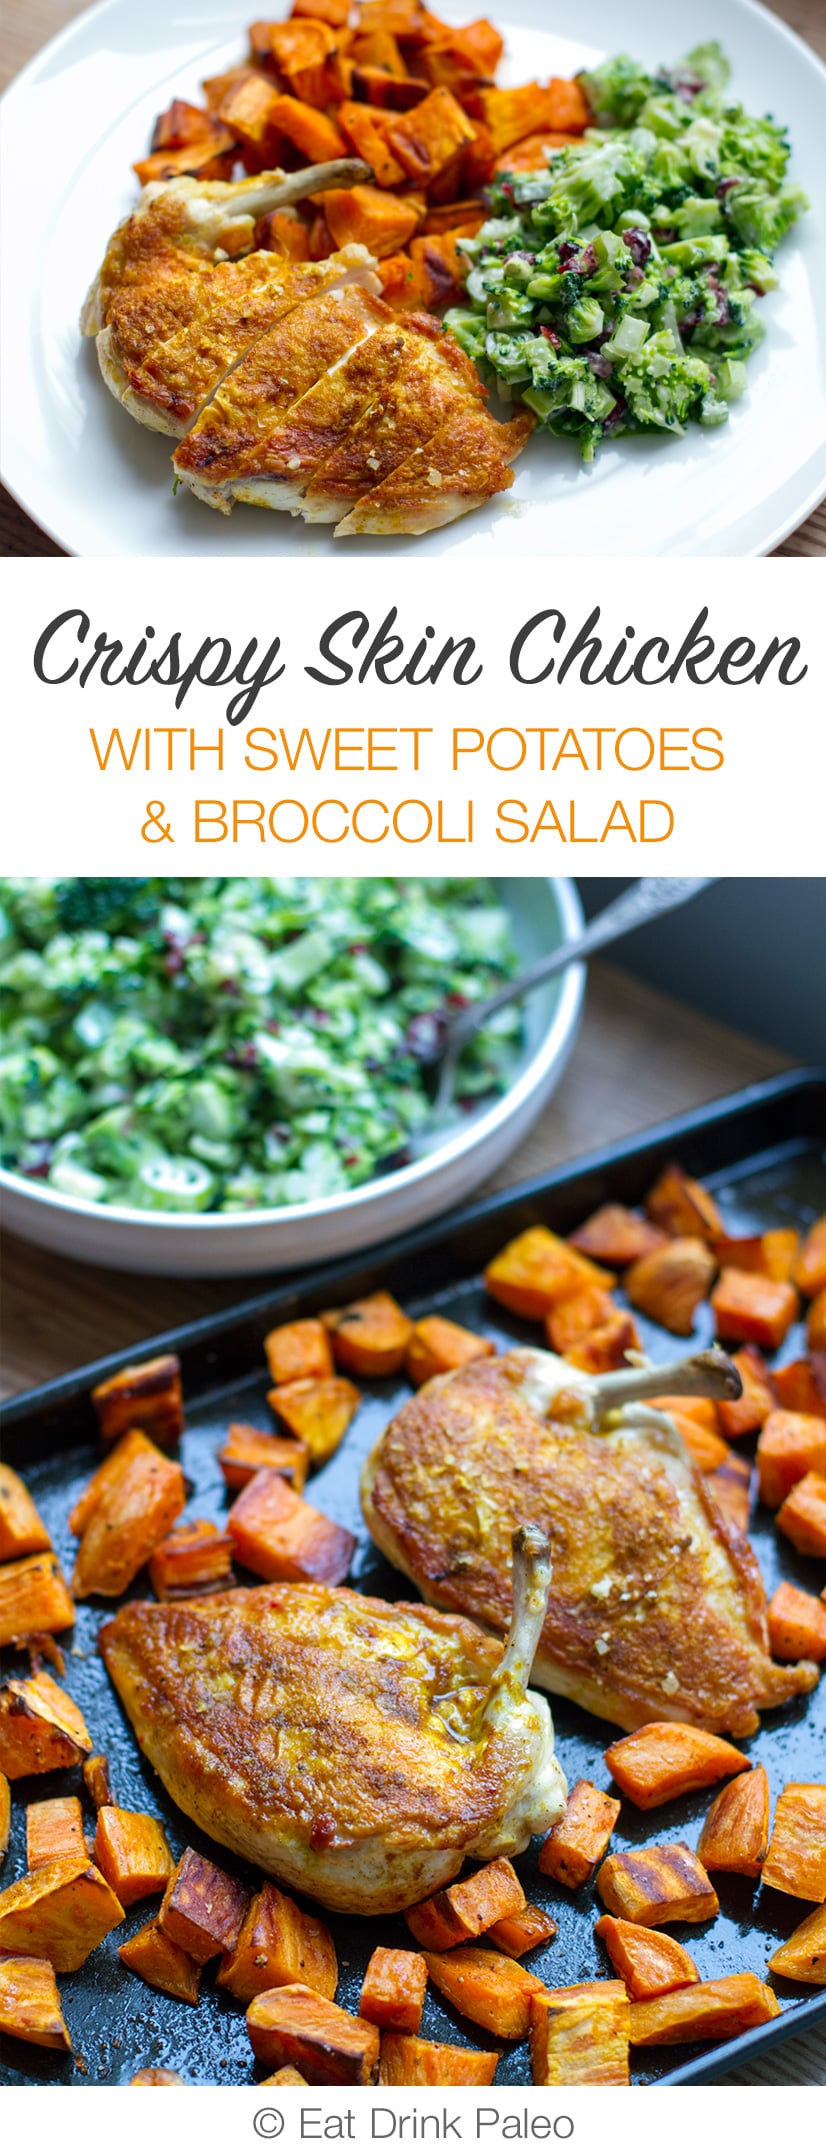 Crispy Skin Chicken With Roasted Sweet Potatoes & Broccoli Slaw Salad (Paleo, Gluten-Free, Real Food Meal)